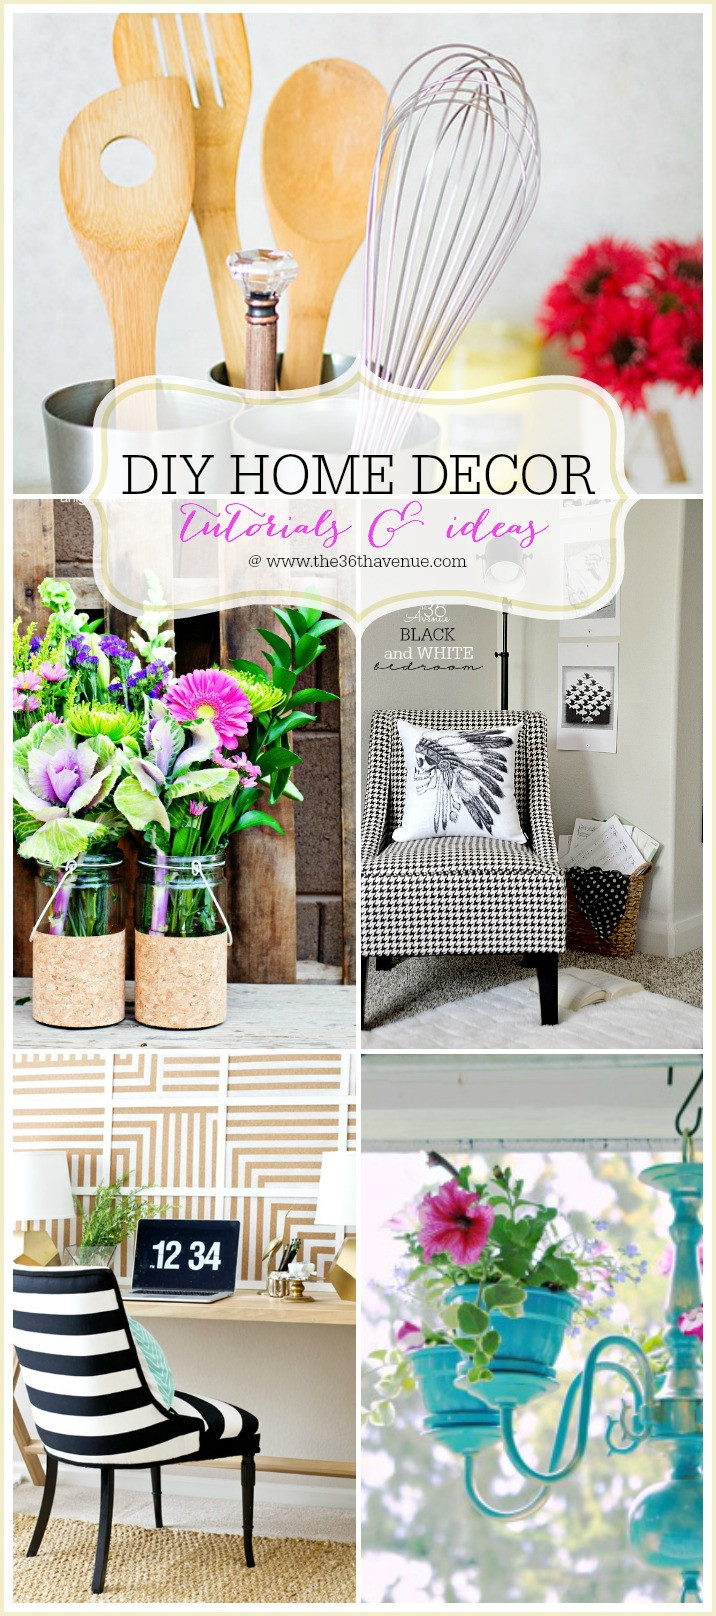 Home Decor Ideas DIY
 The 36th AVENUE Home Decor DIY Projects